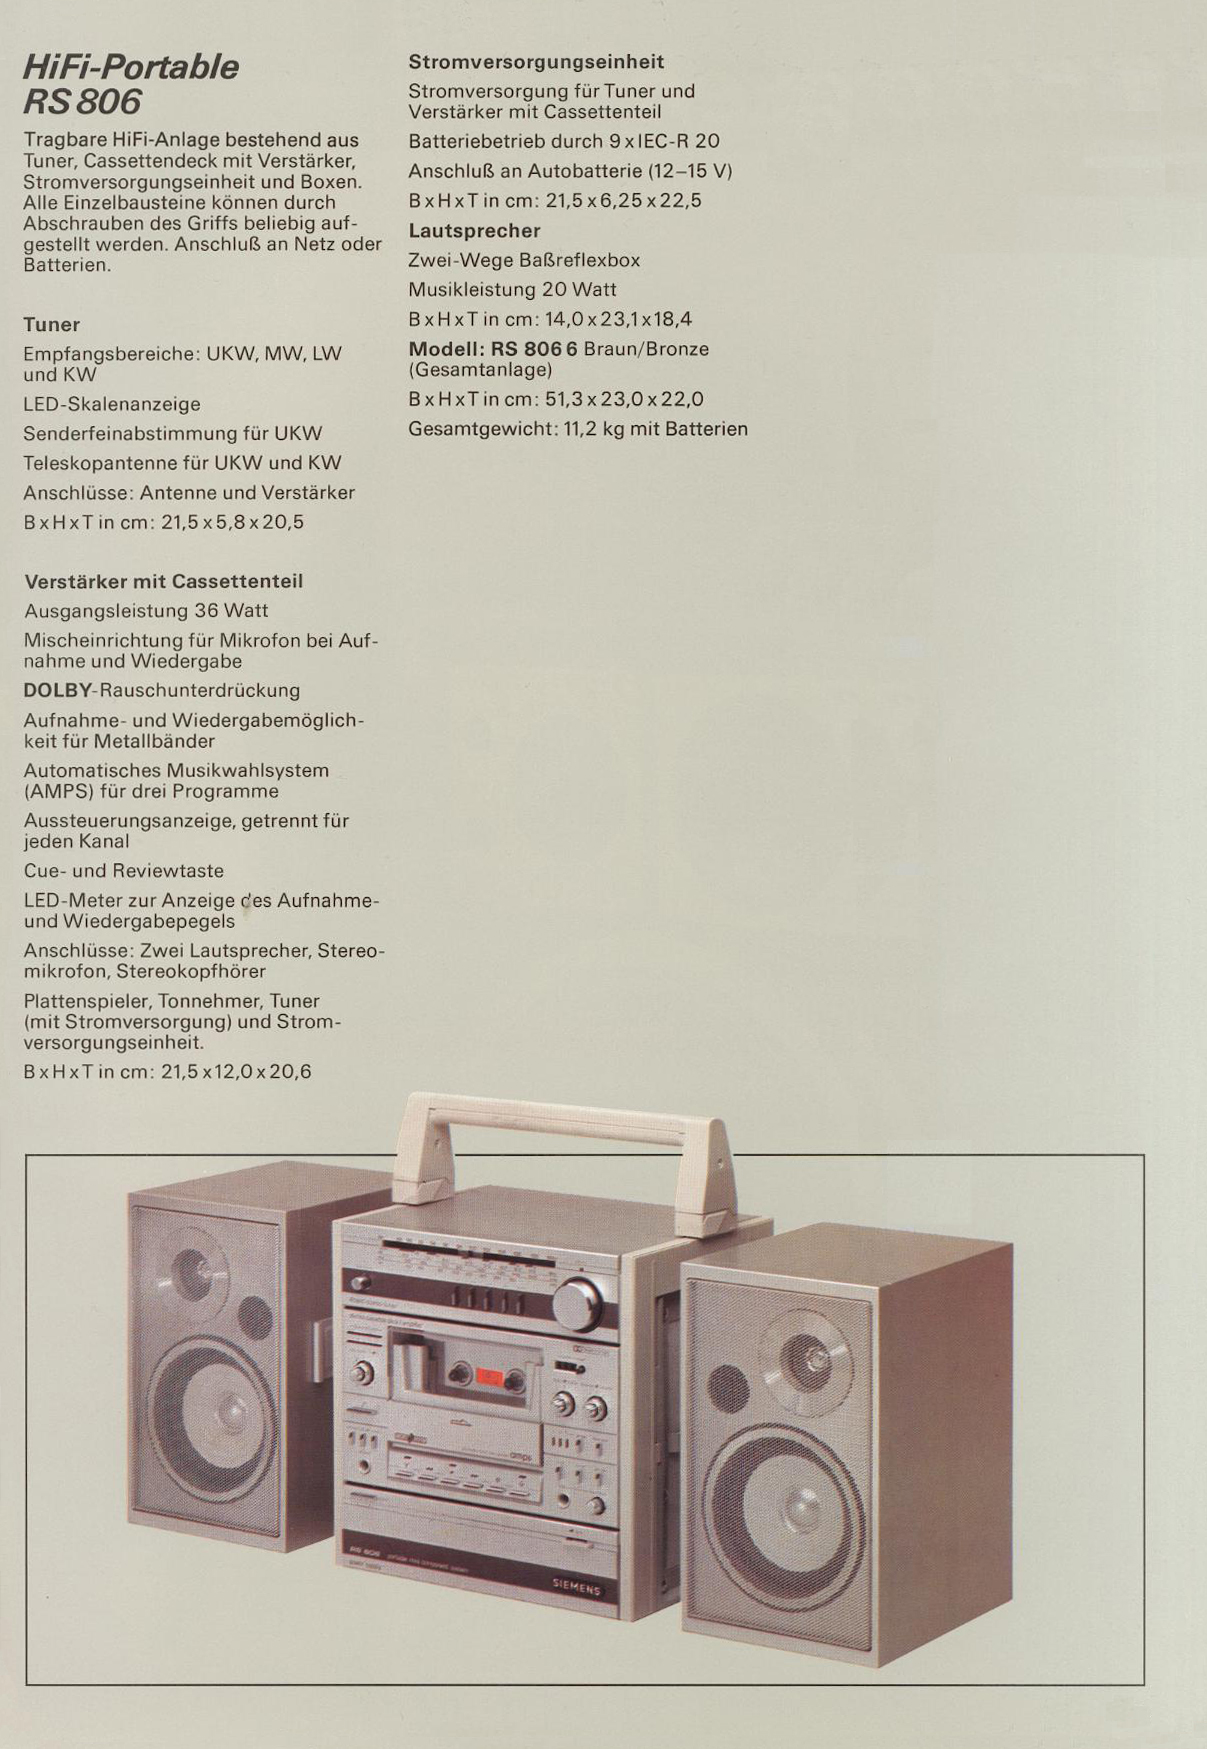 Siemens Hifi-Portable RS-806-Daten-1982.jpg